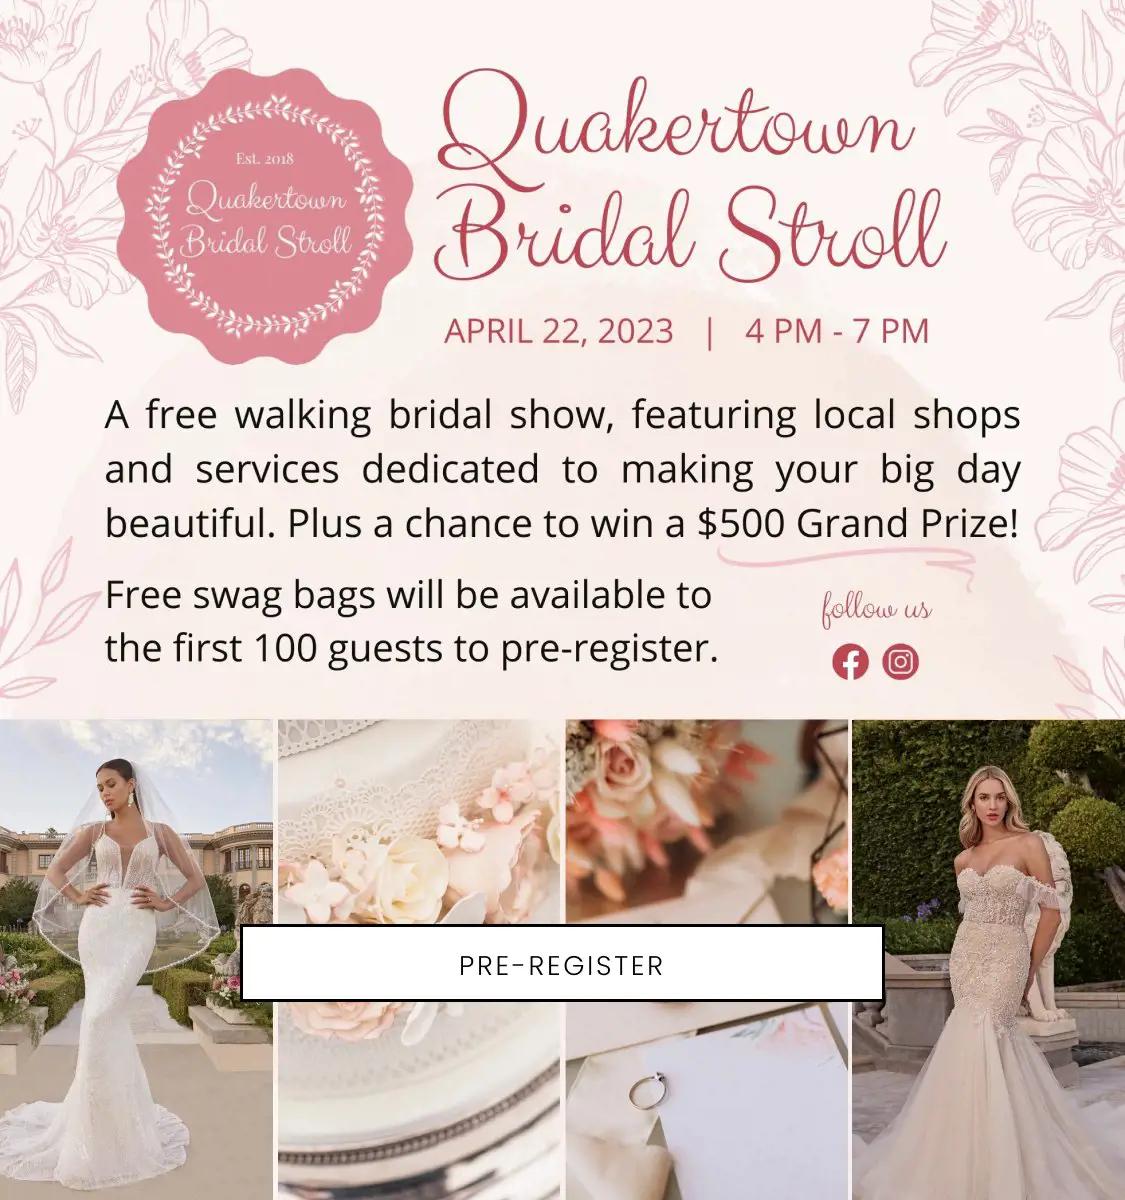 Quakertown Bridal Stroll APRIL 22, 2023 | 4 PM - 7 PM